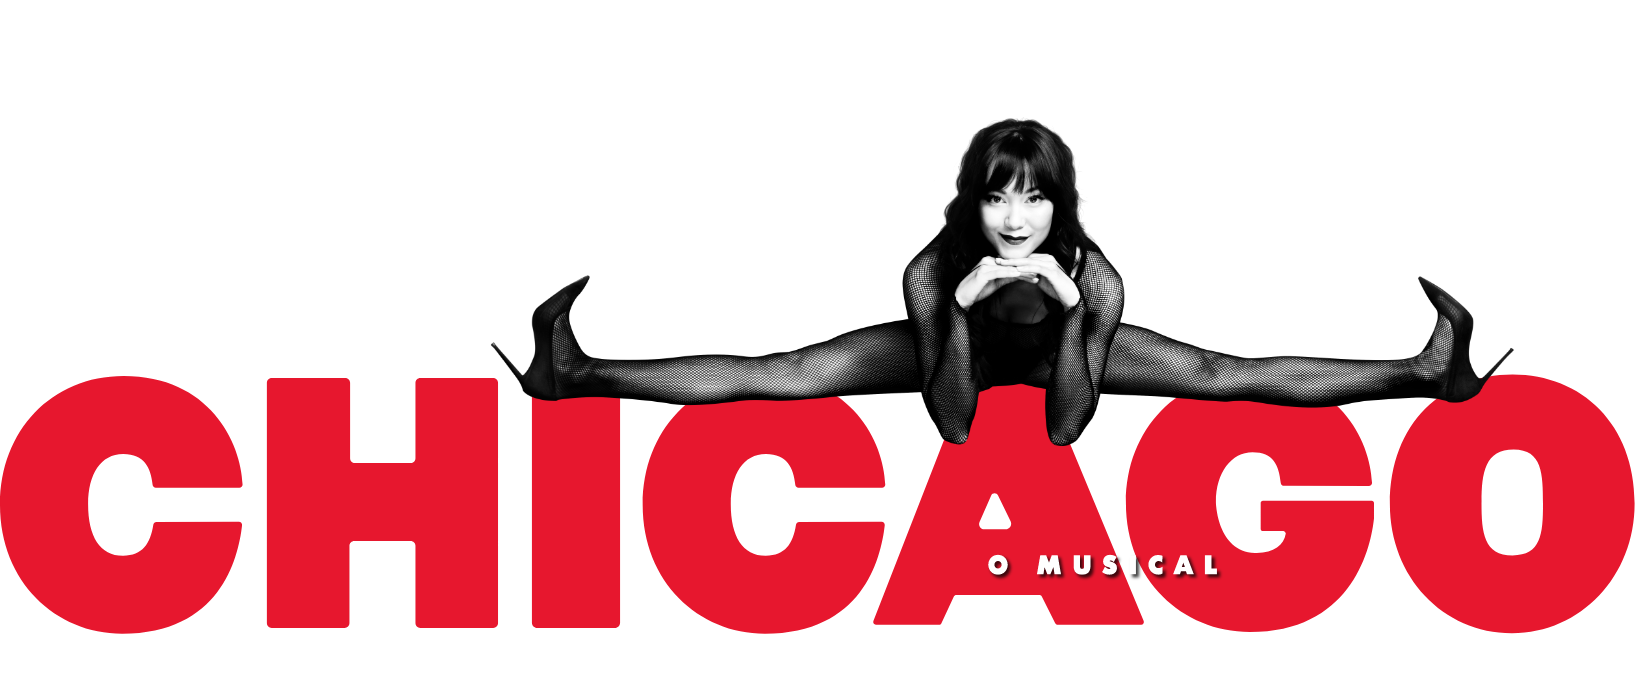 Chicago - O Musical